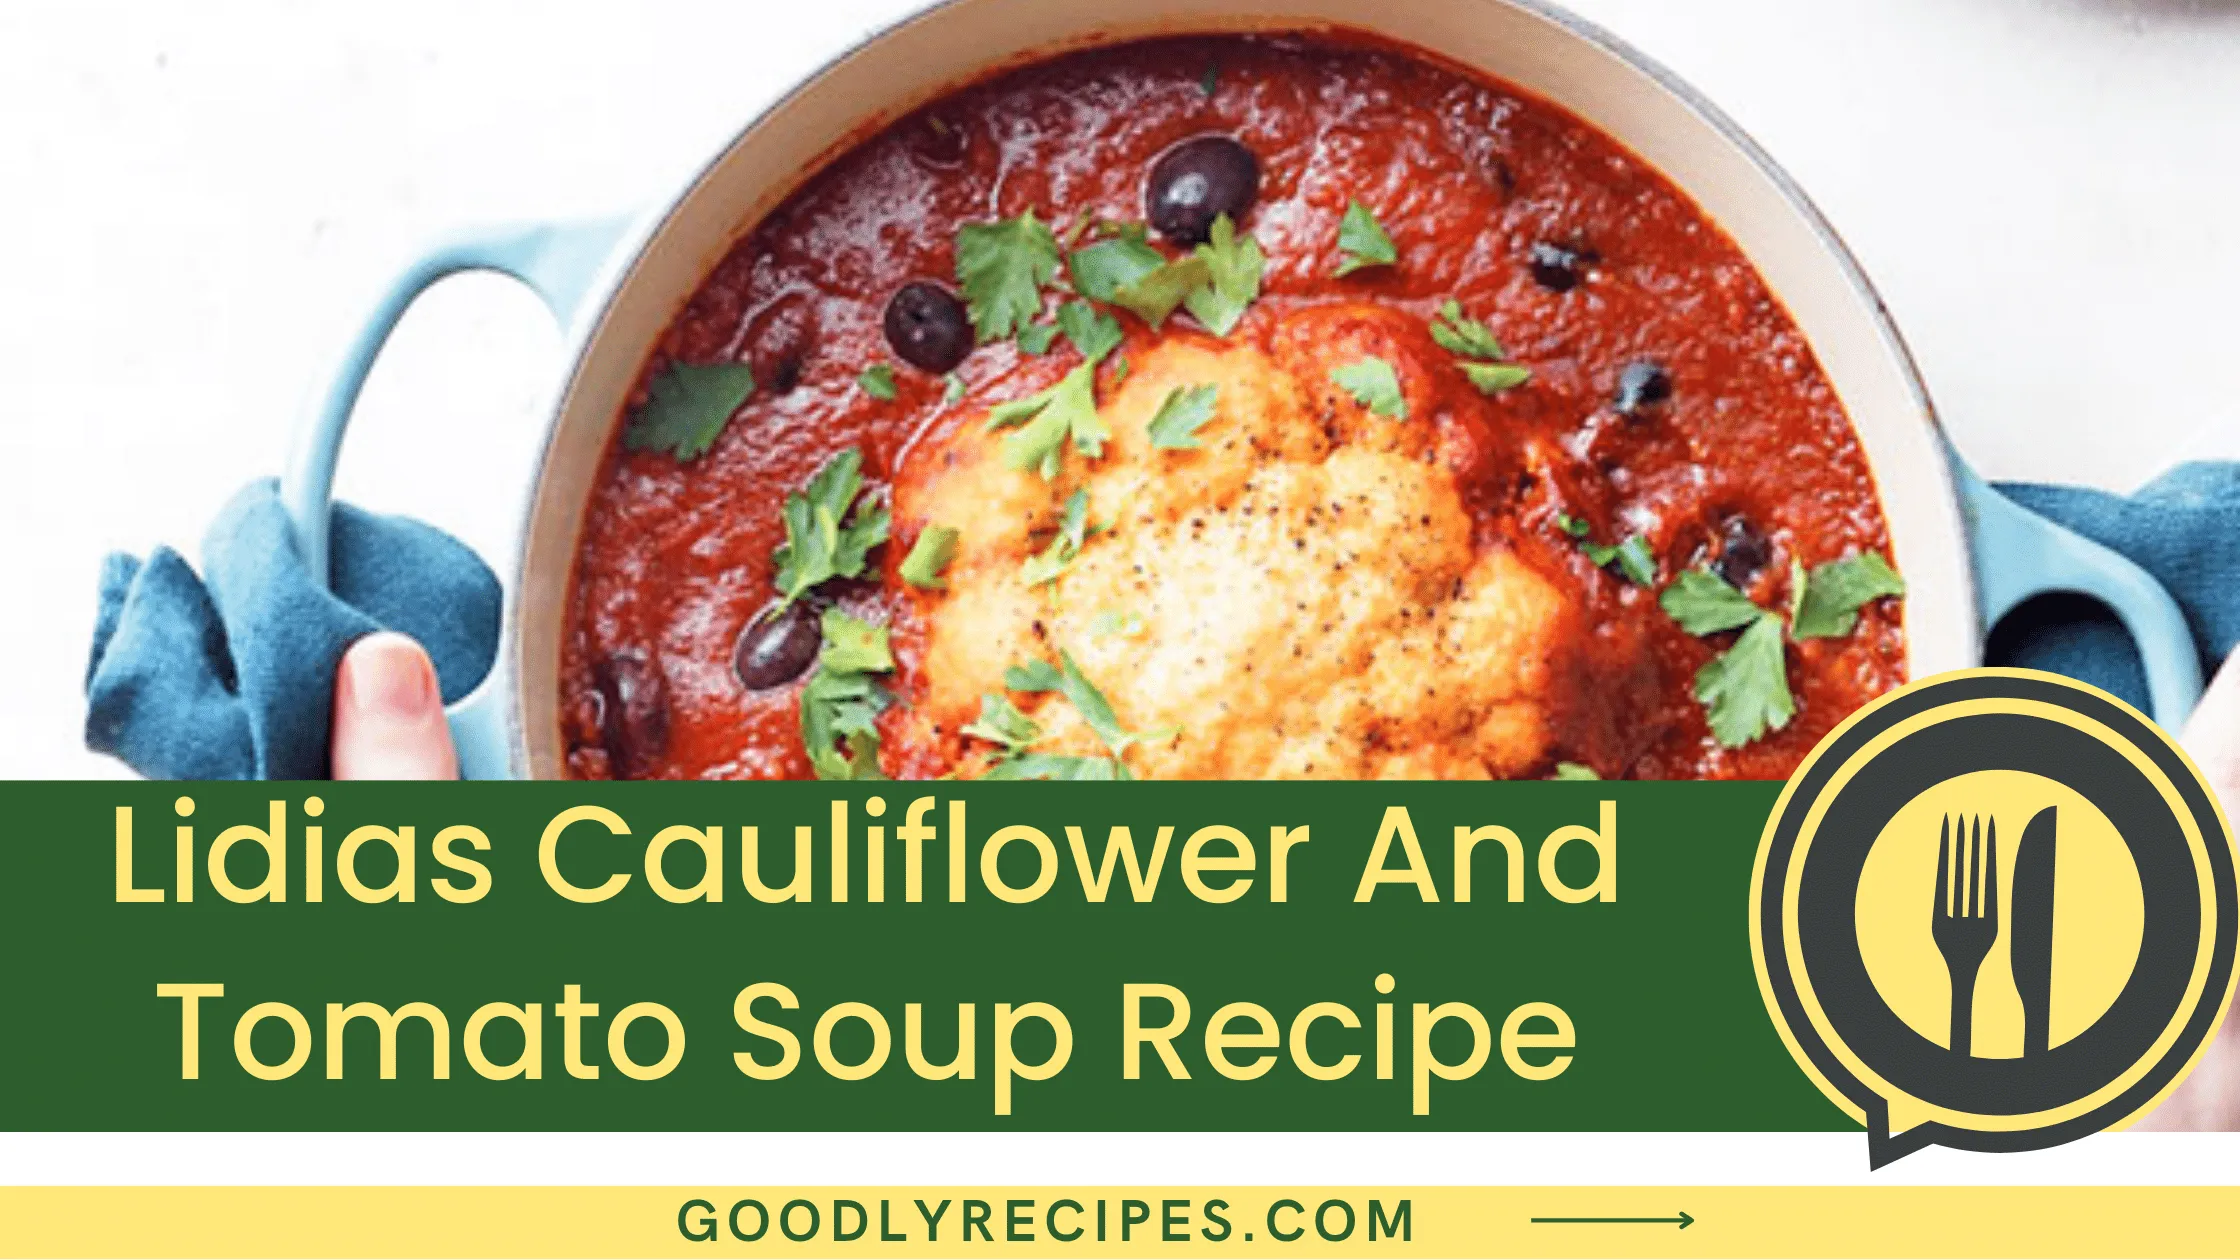 Lidia's Cauliflower And Tomato Soup Recipe